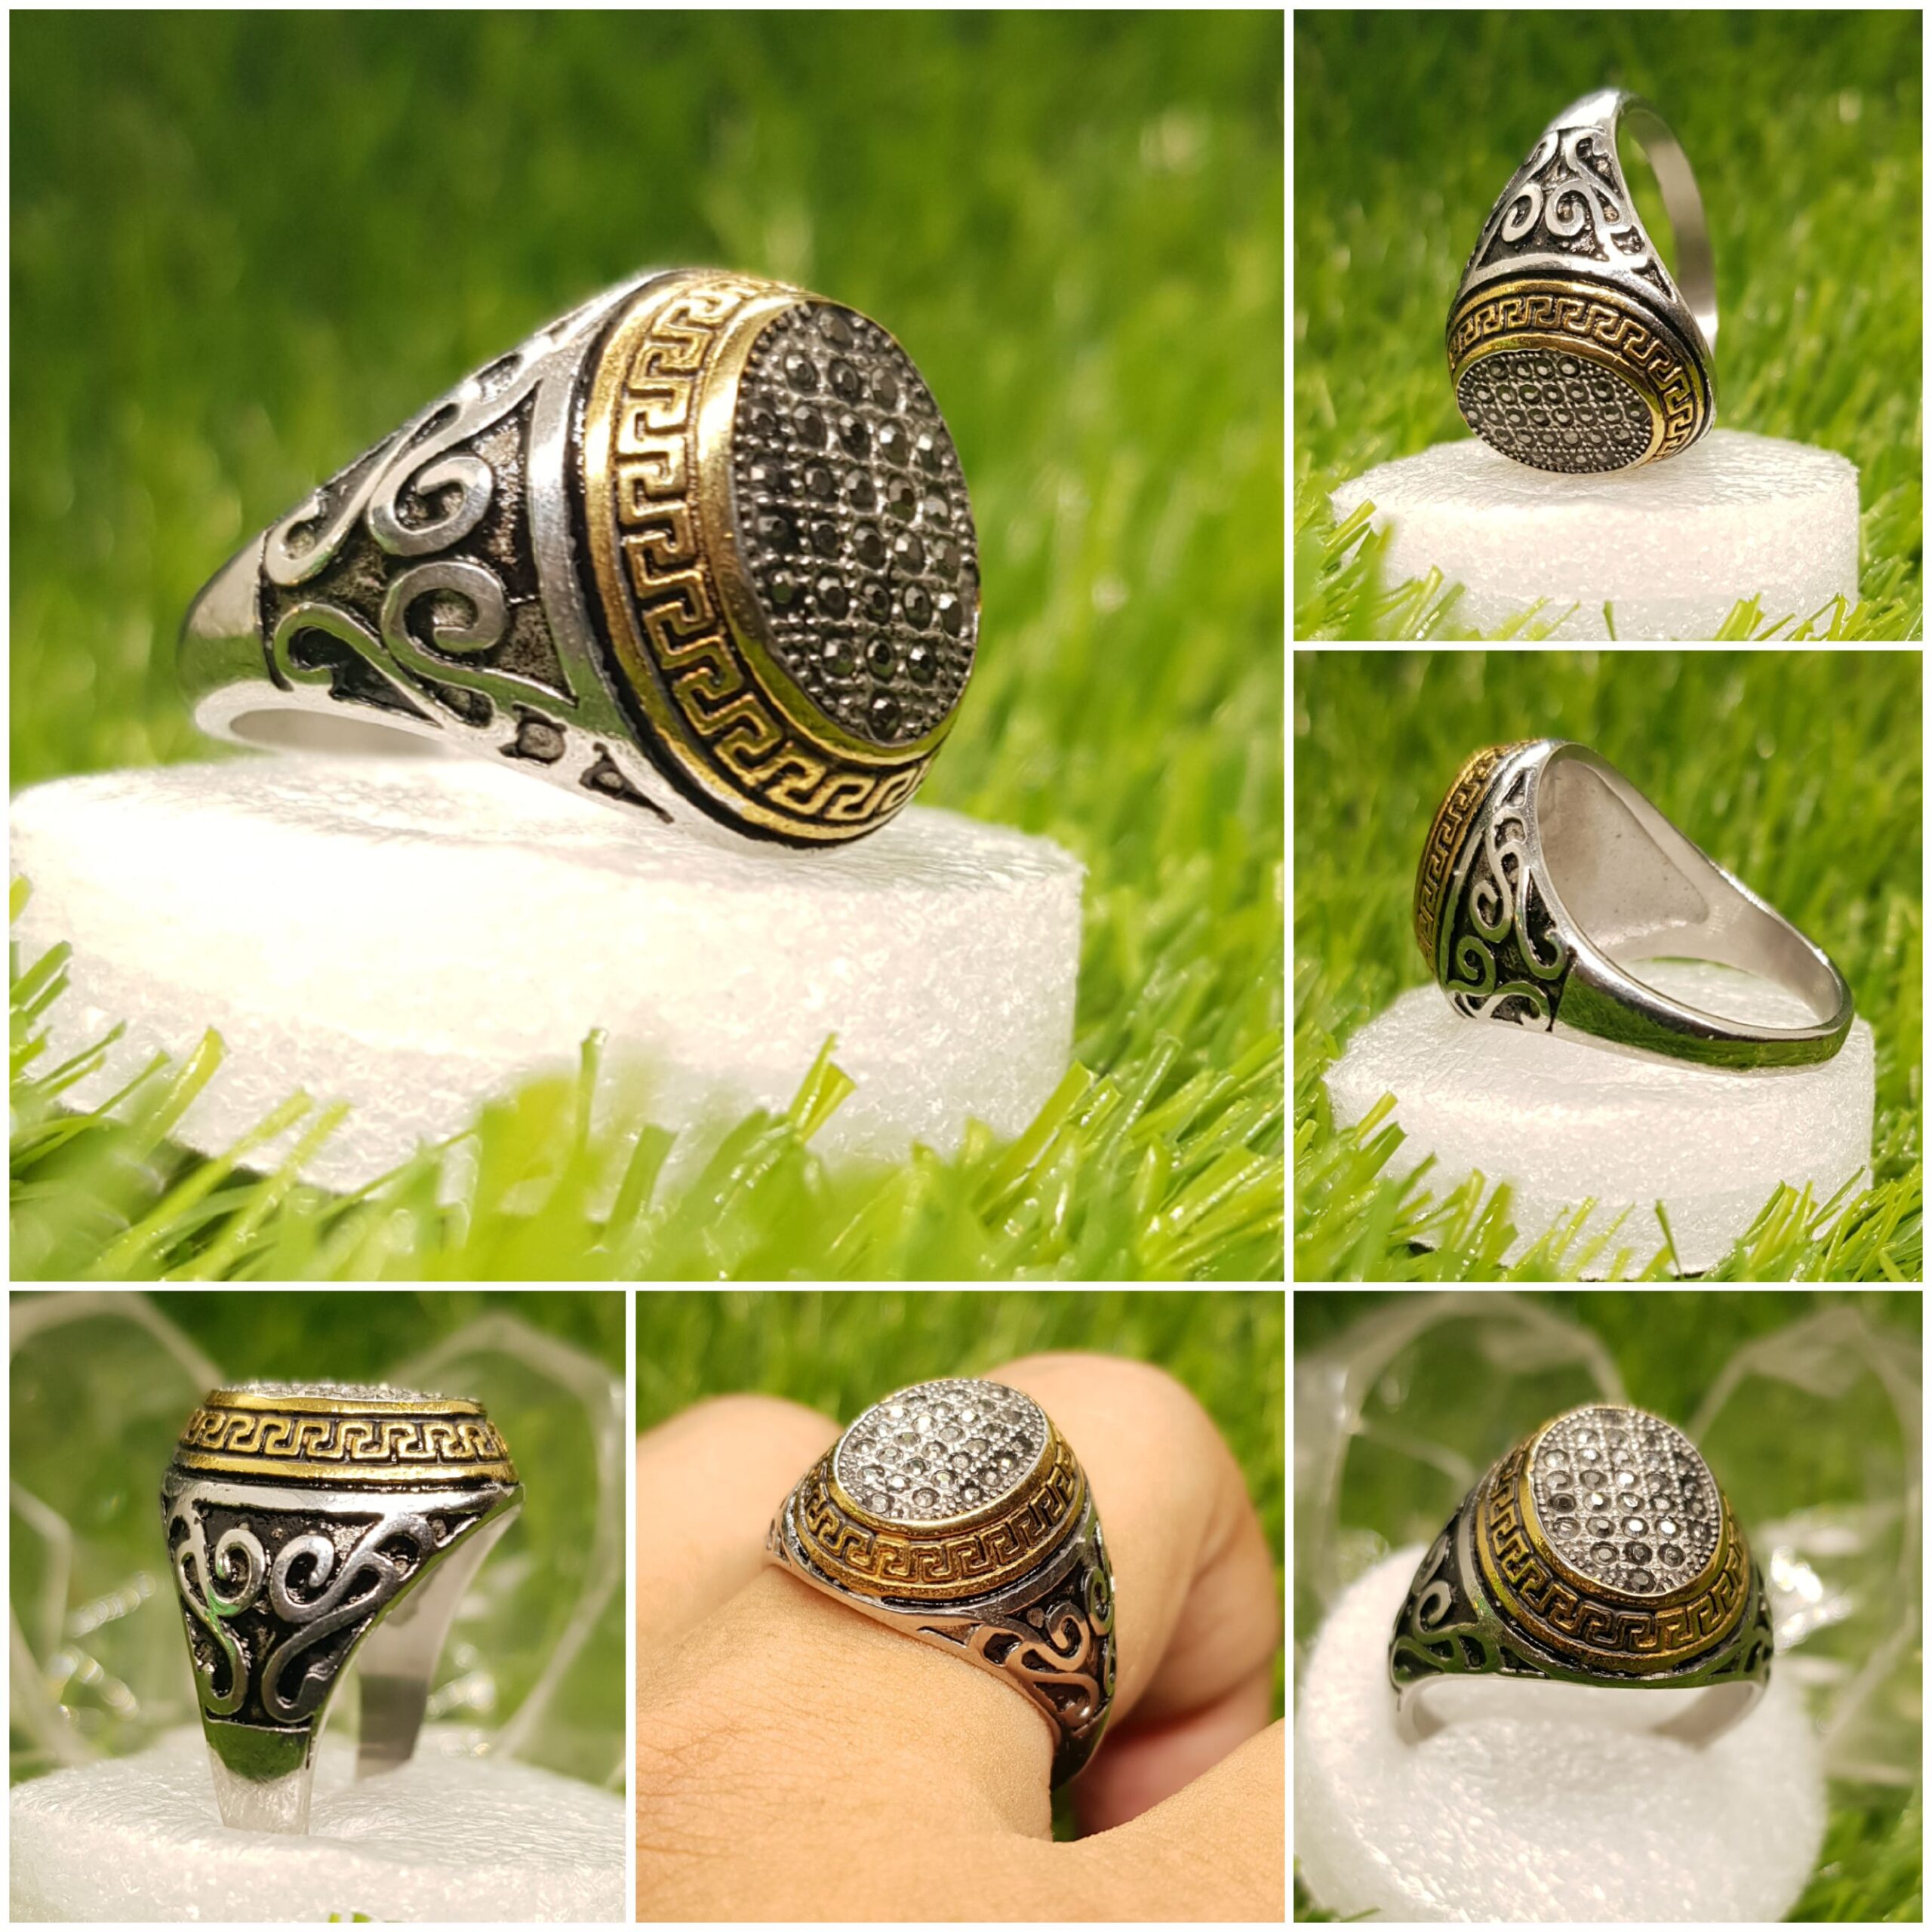 Bhima Gold Online for Elegant Silver Rings - Buy Now